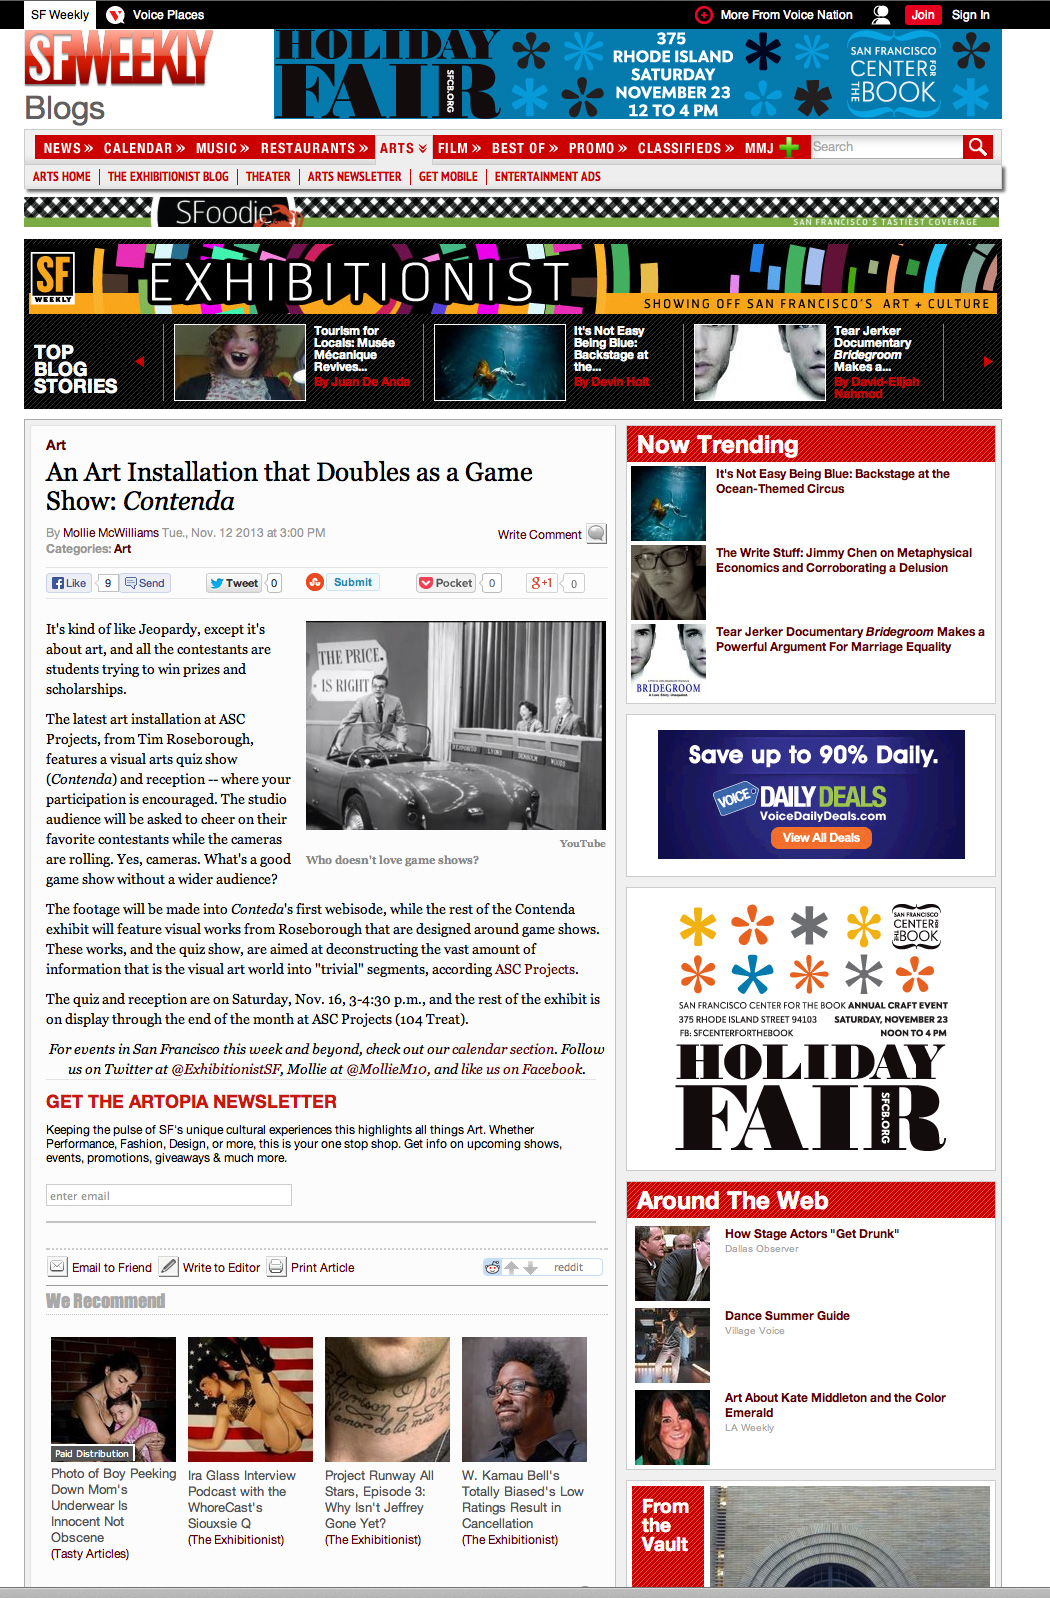 SFweekly.com, November 12, 2013